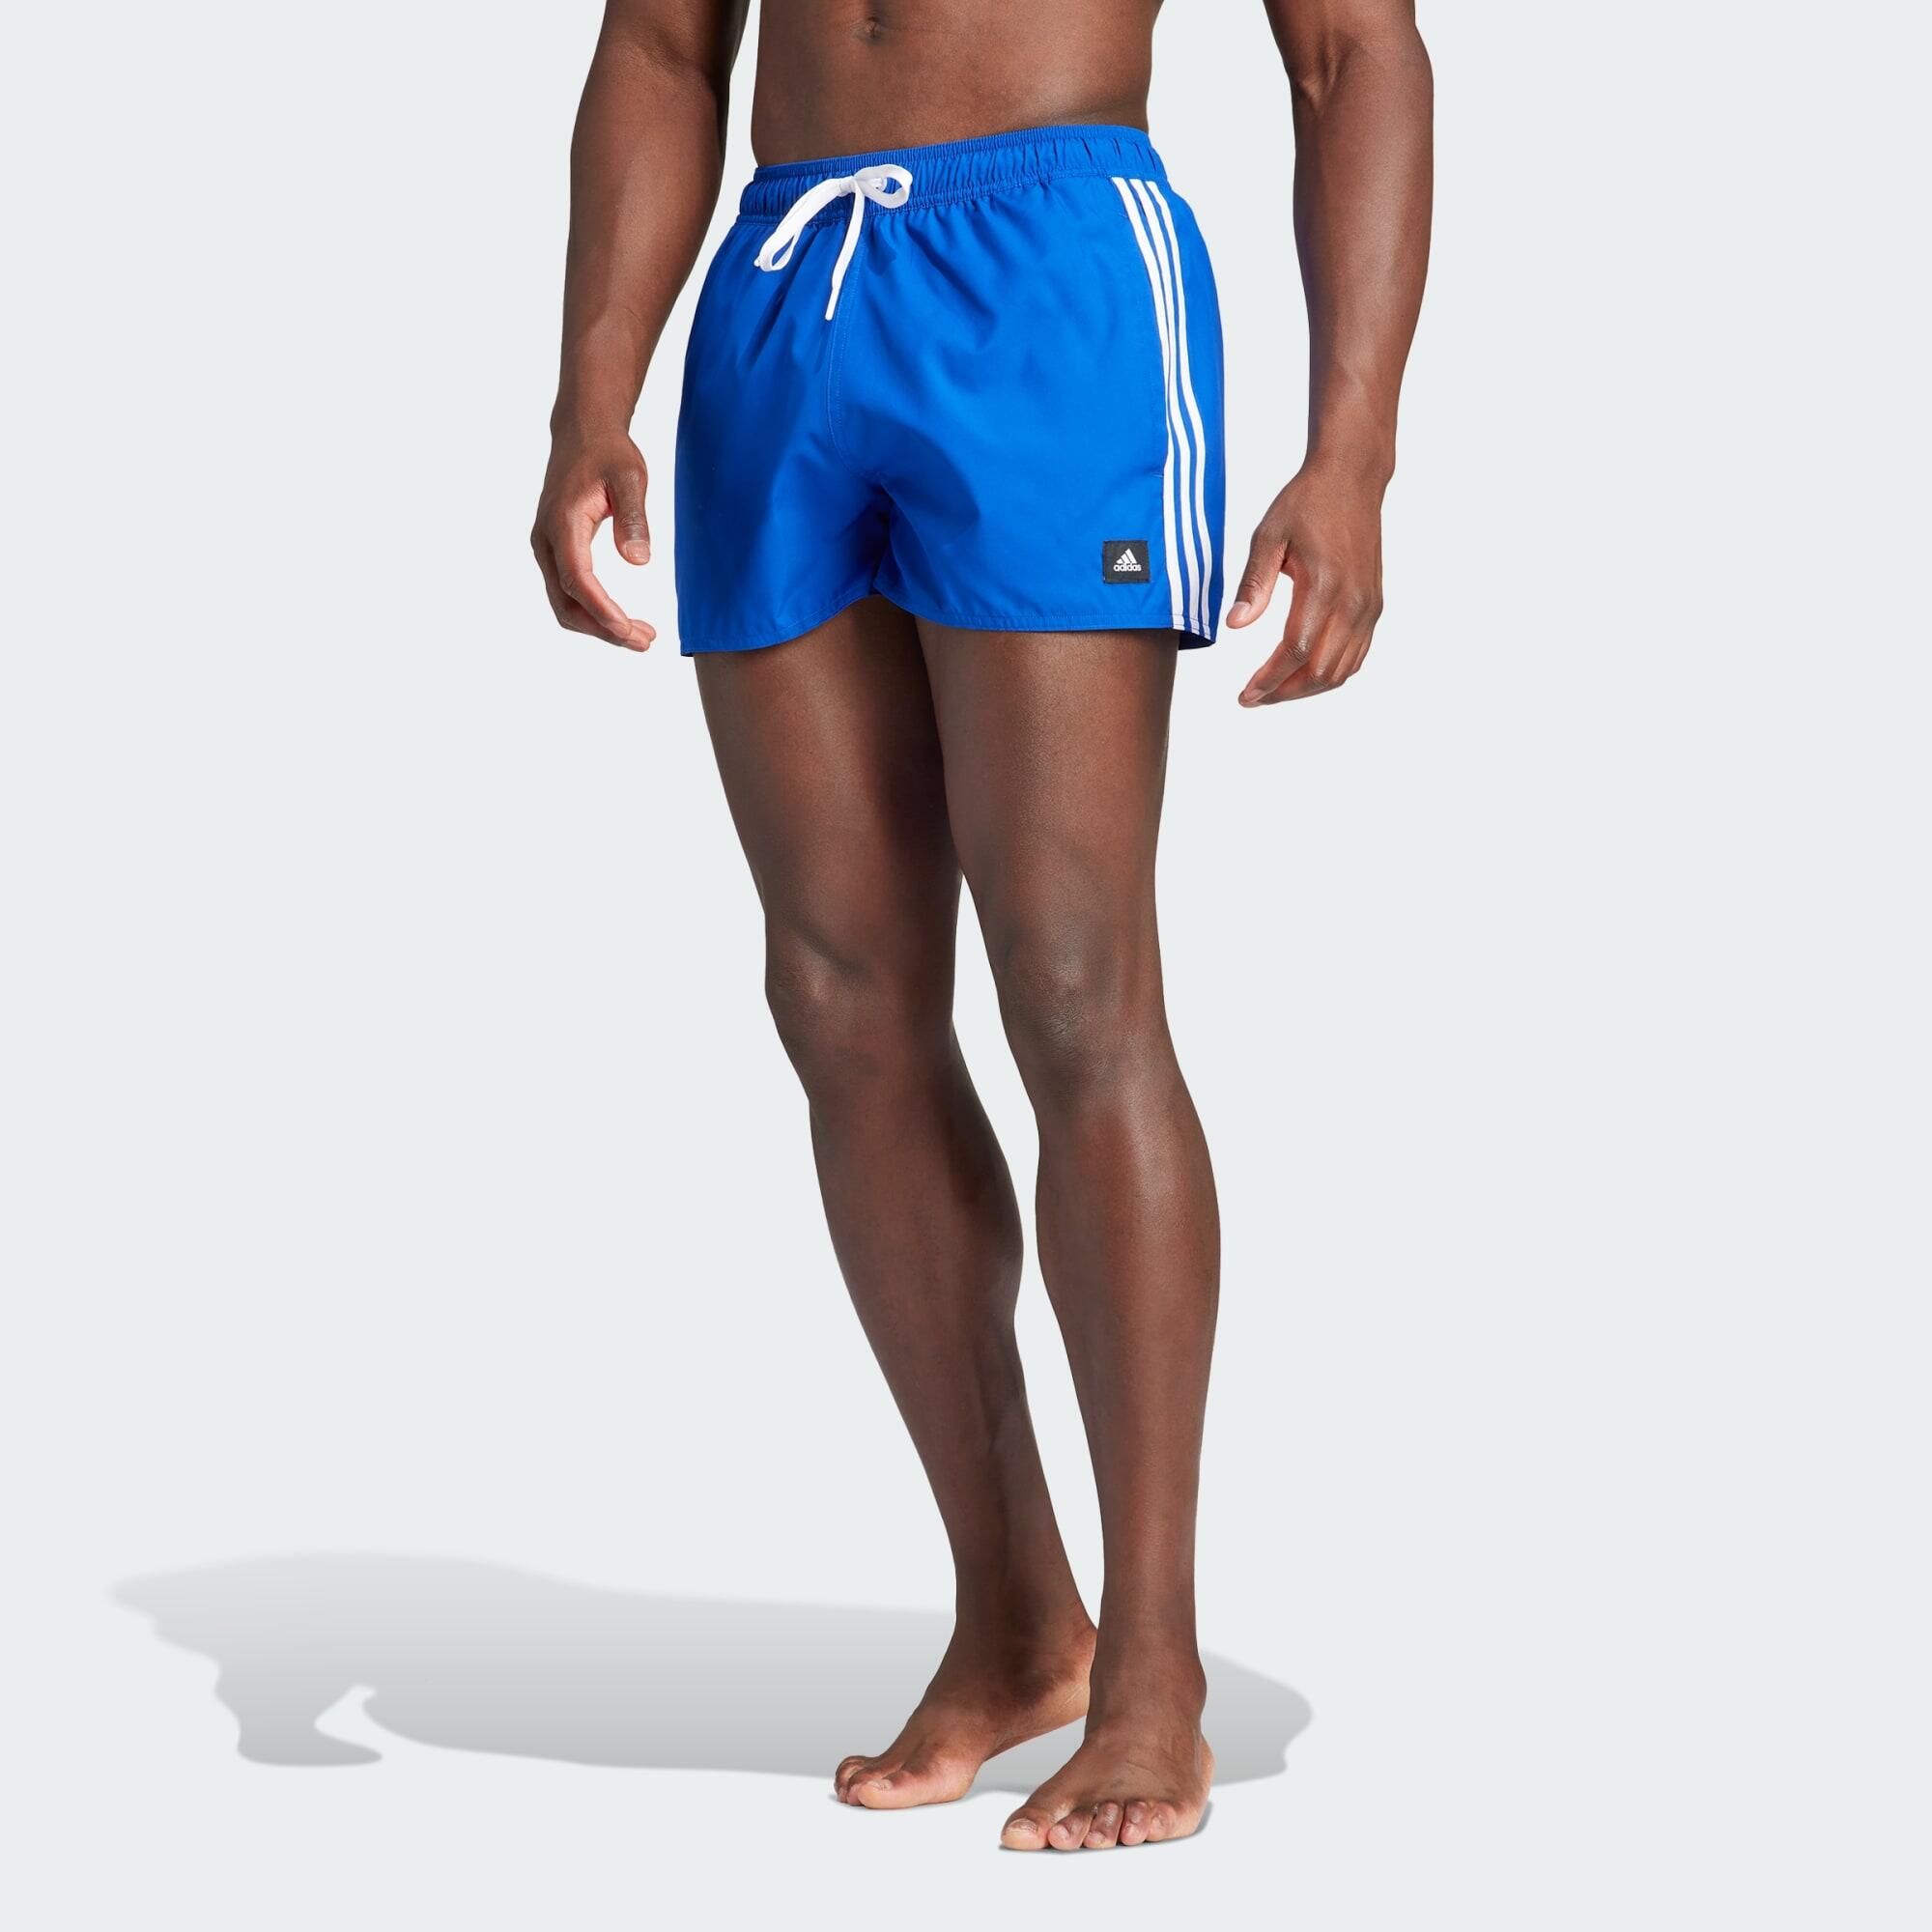 ADIDAS 3-Stripes CLX Very-Short-Length Swim Shorts